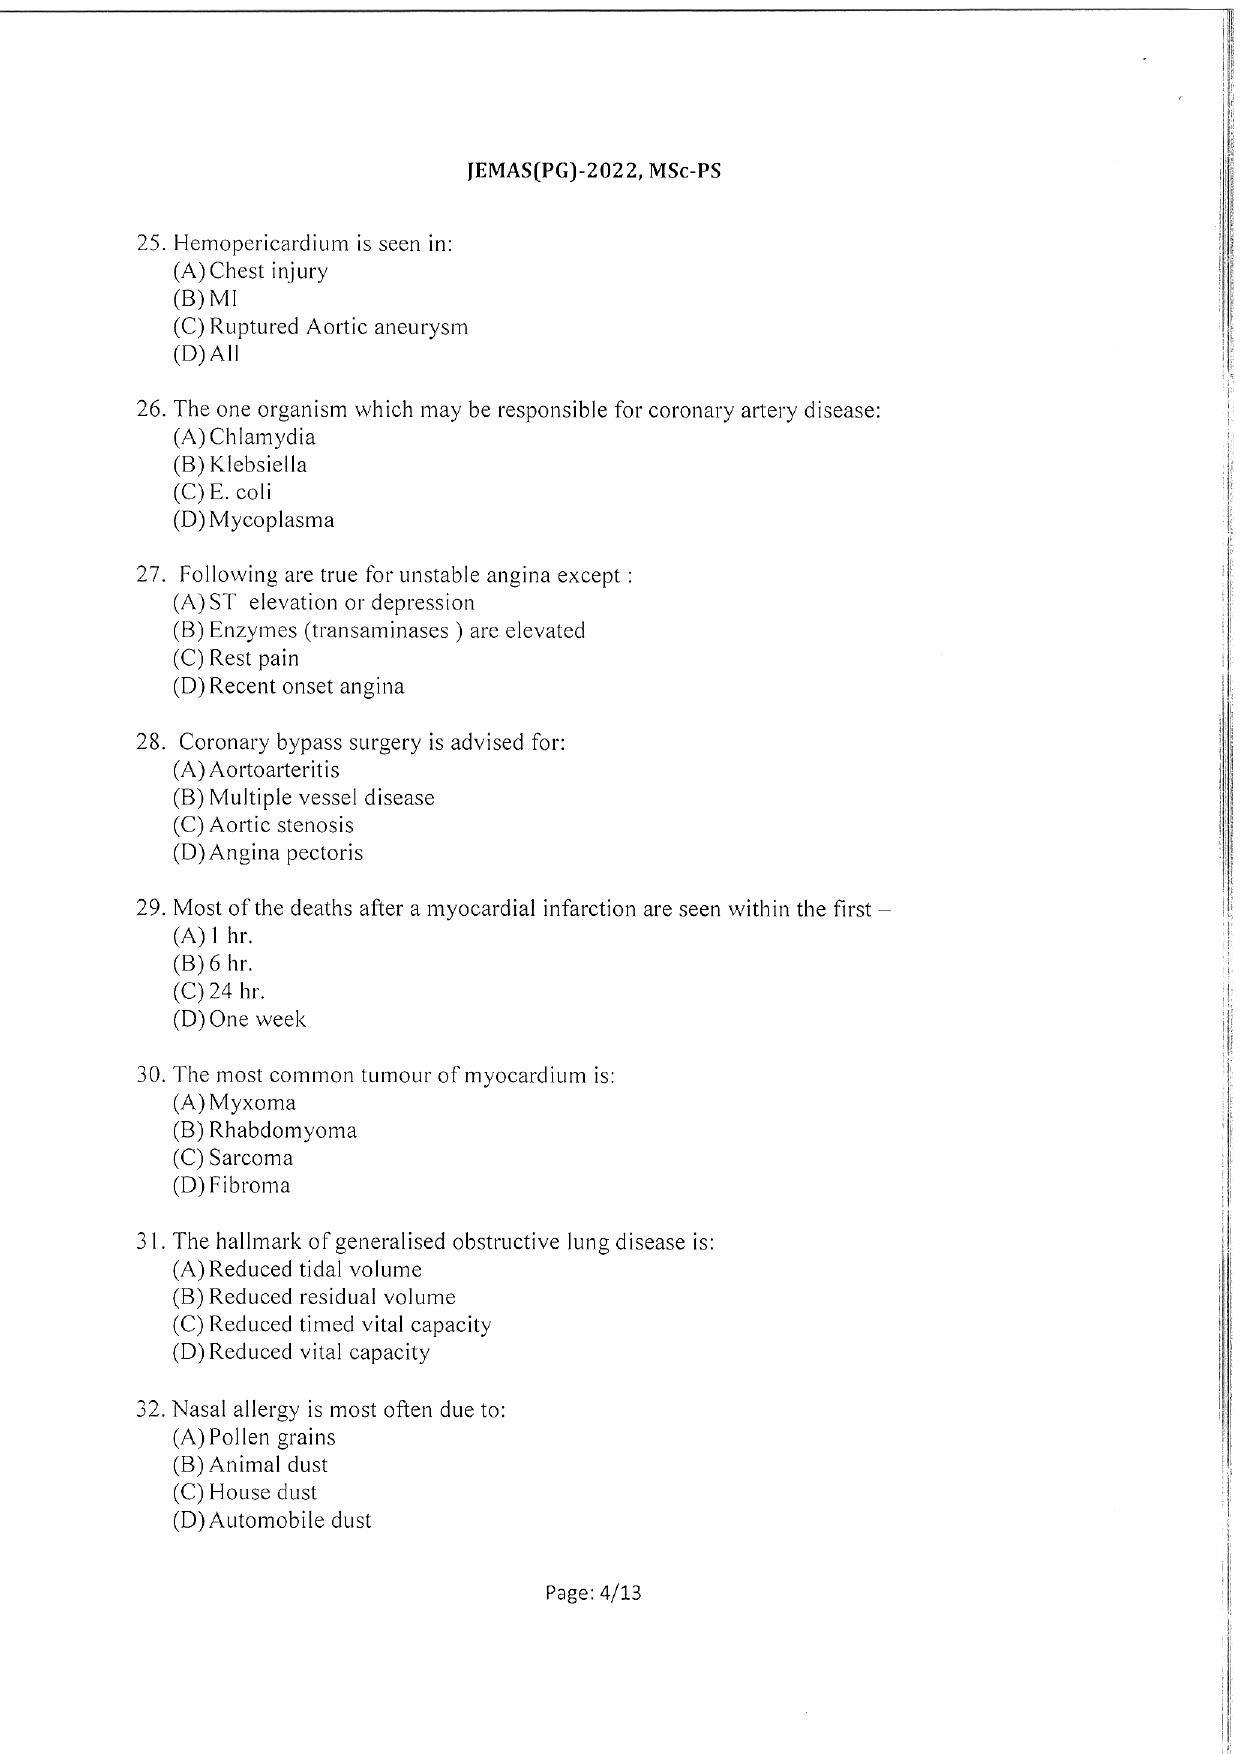 WBJEEB JEMAS (PG) 2022 MSc PS Question Paper - Page 6